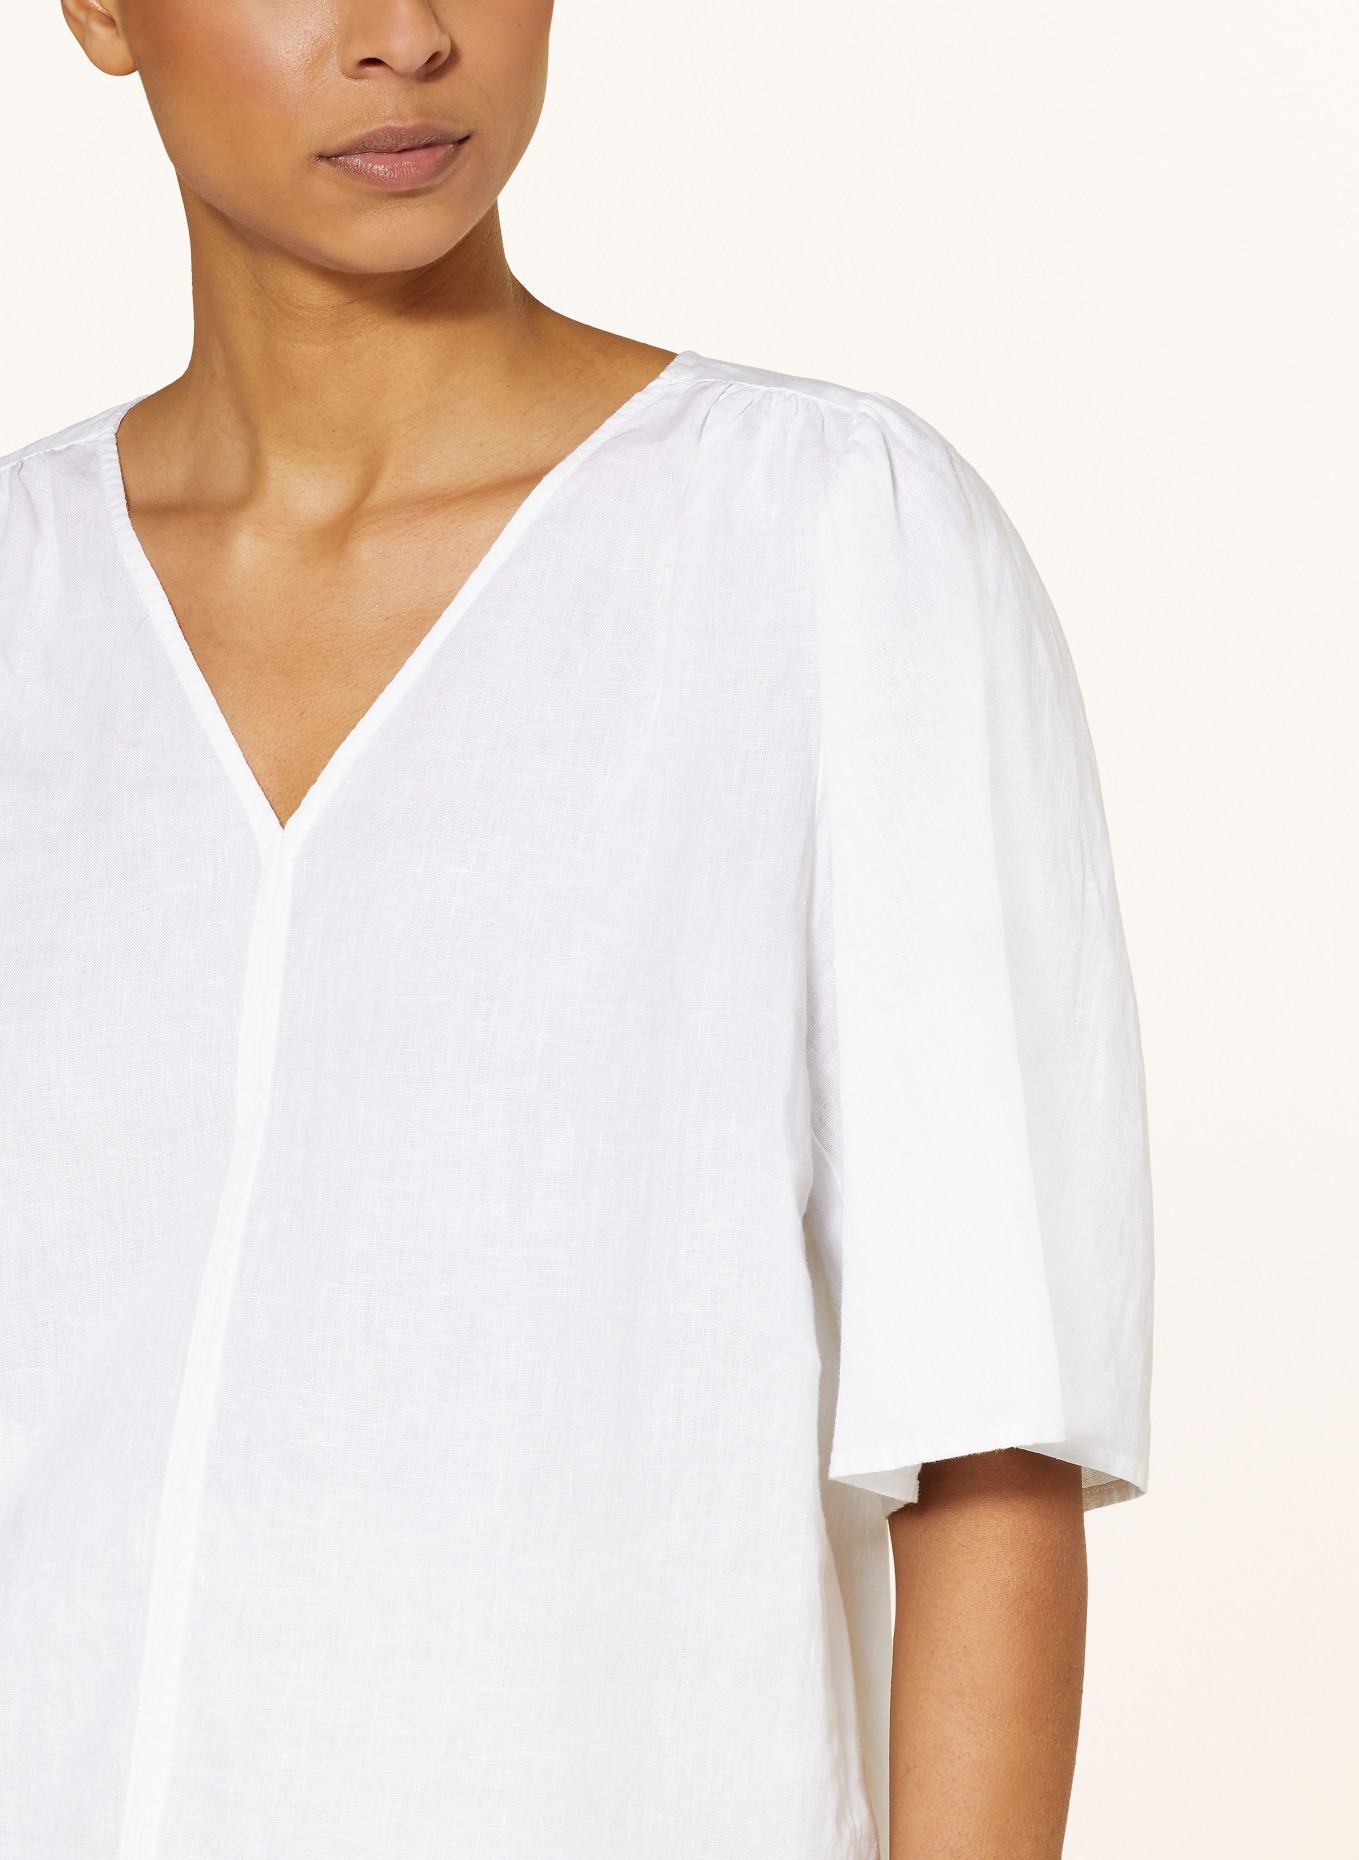 Marc O'Polo Shirt blouse made of linen, Color: WHITE (Image 4)